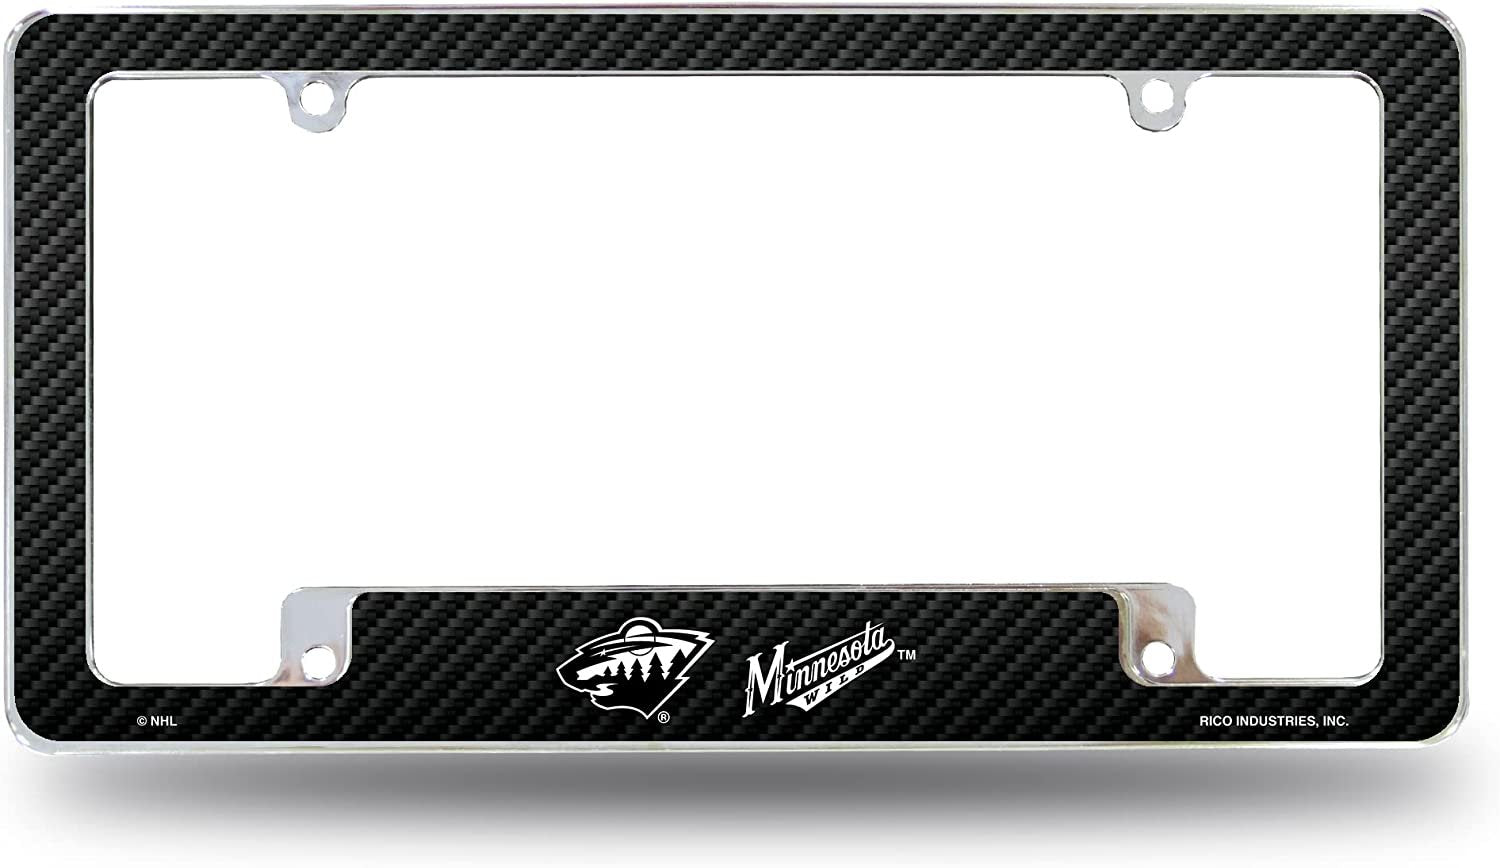 Minnesota Wild Metal License Plate Frame Chrome Tag Cover Carbon Fiber Design 6x12 Inch